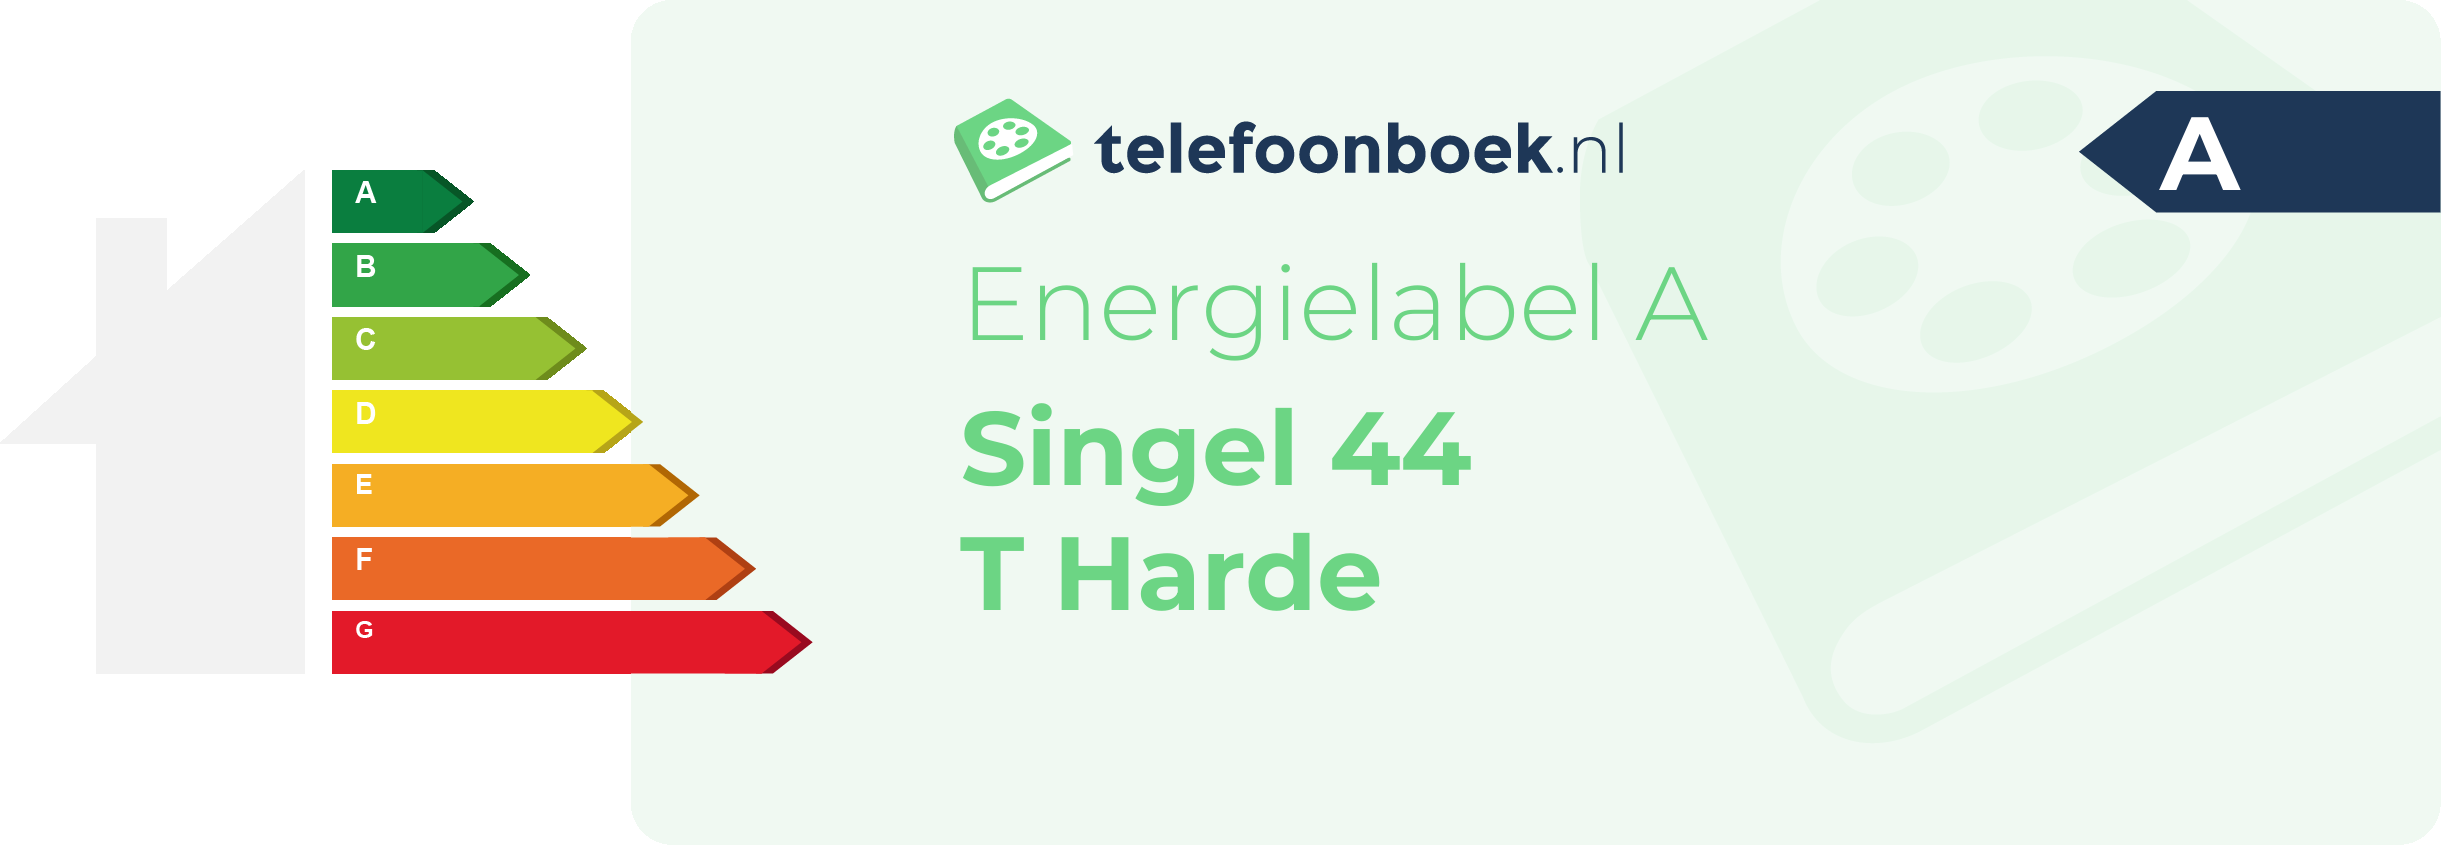 Energielabel Singel 44 T Harde